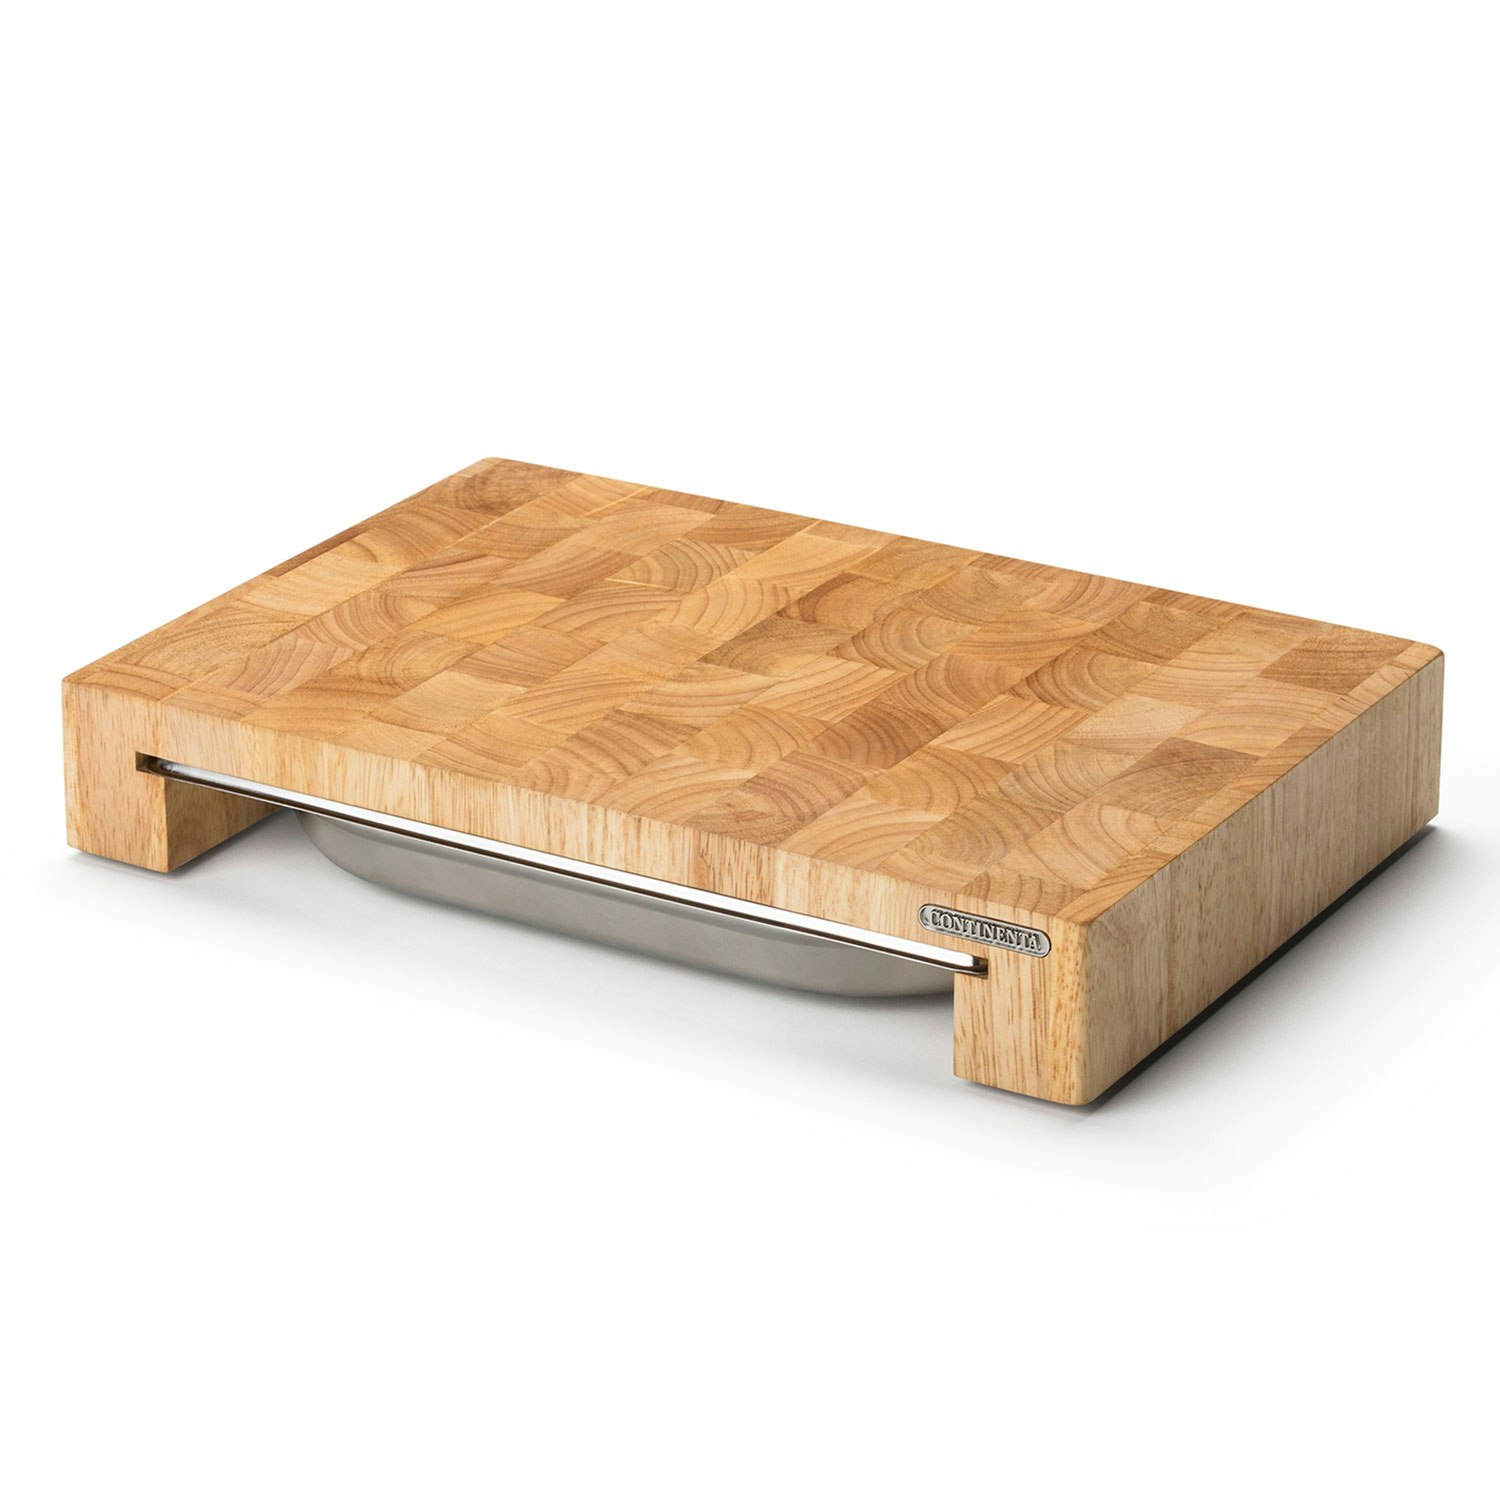 Chopping Board With Notch, 41x30,5 cm - Teakhaus @ RoyalDesign